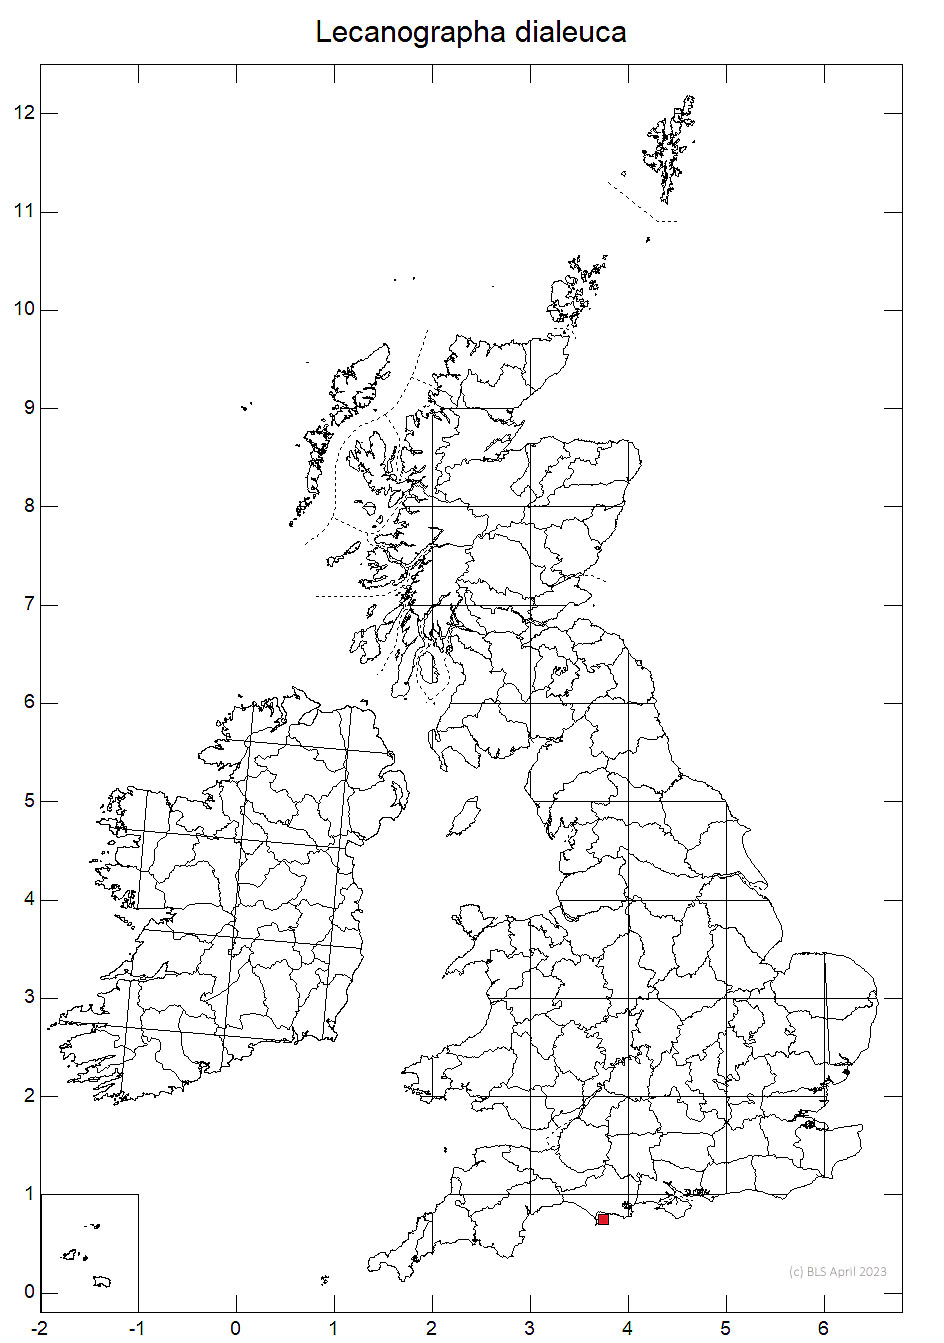 Lecanographa dialeuca 10km sq distribution map